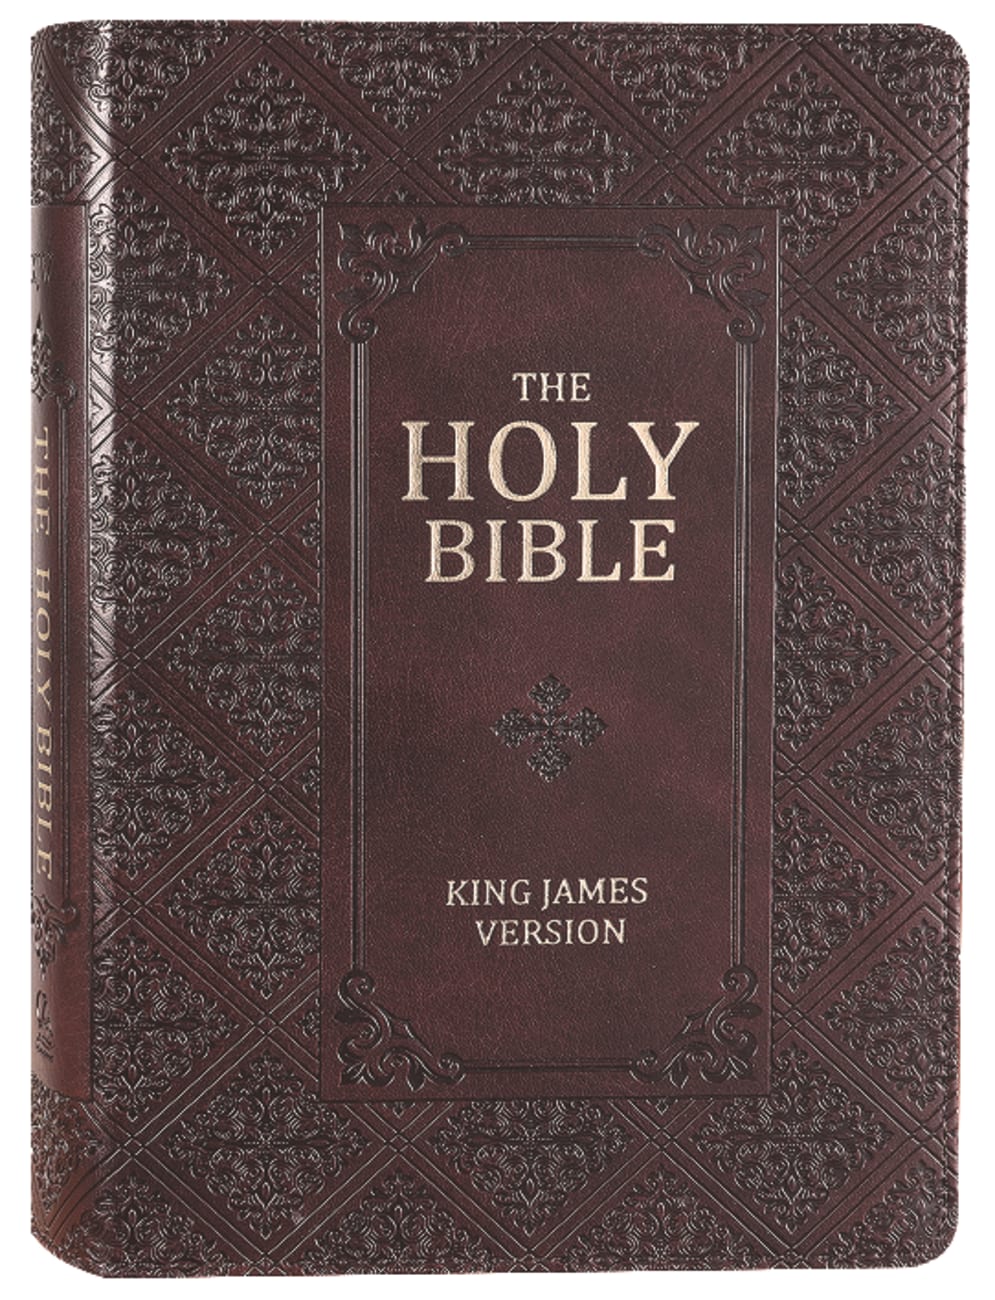 KJV Giant Print Bible Pattern Dark Brown (Red Letter Edition) Imitation Leather